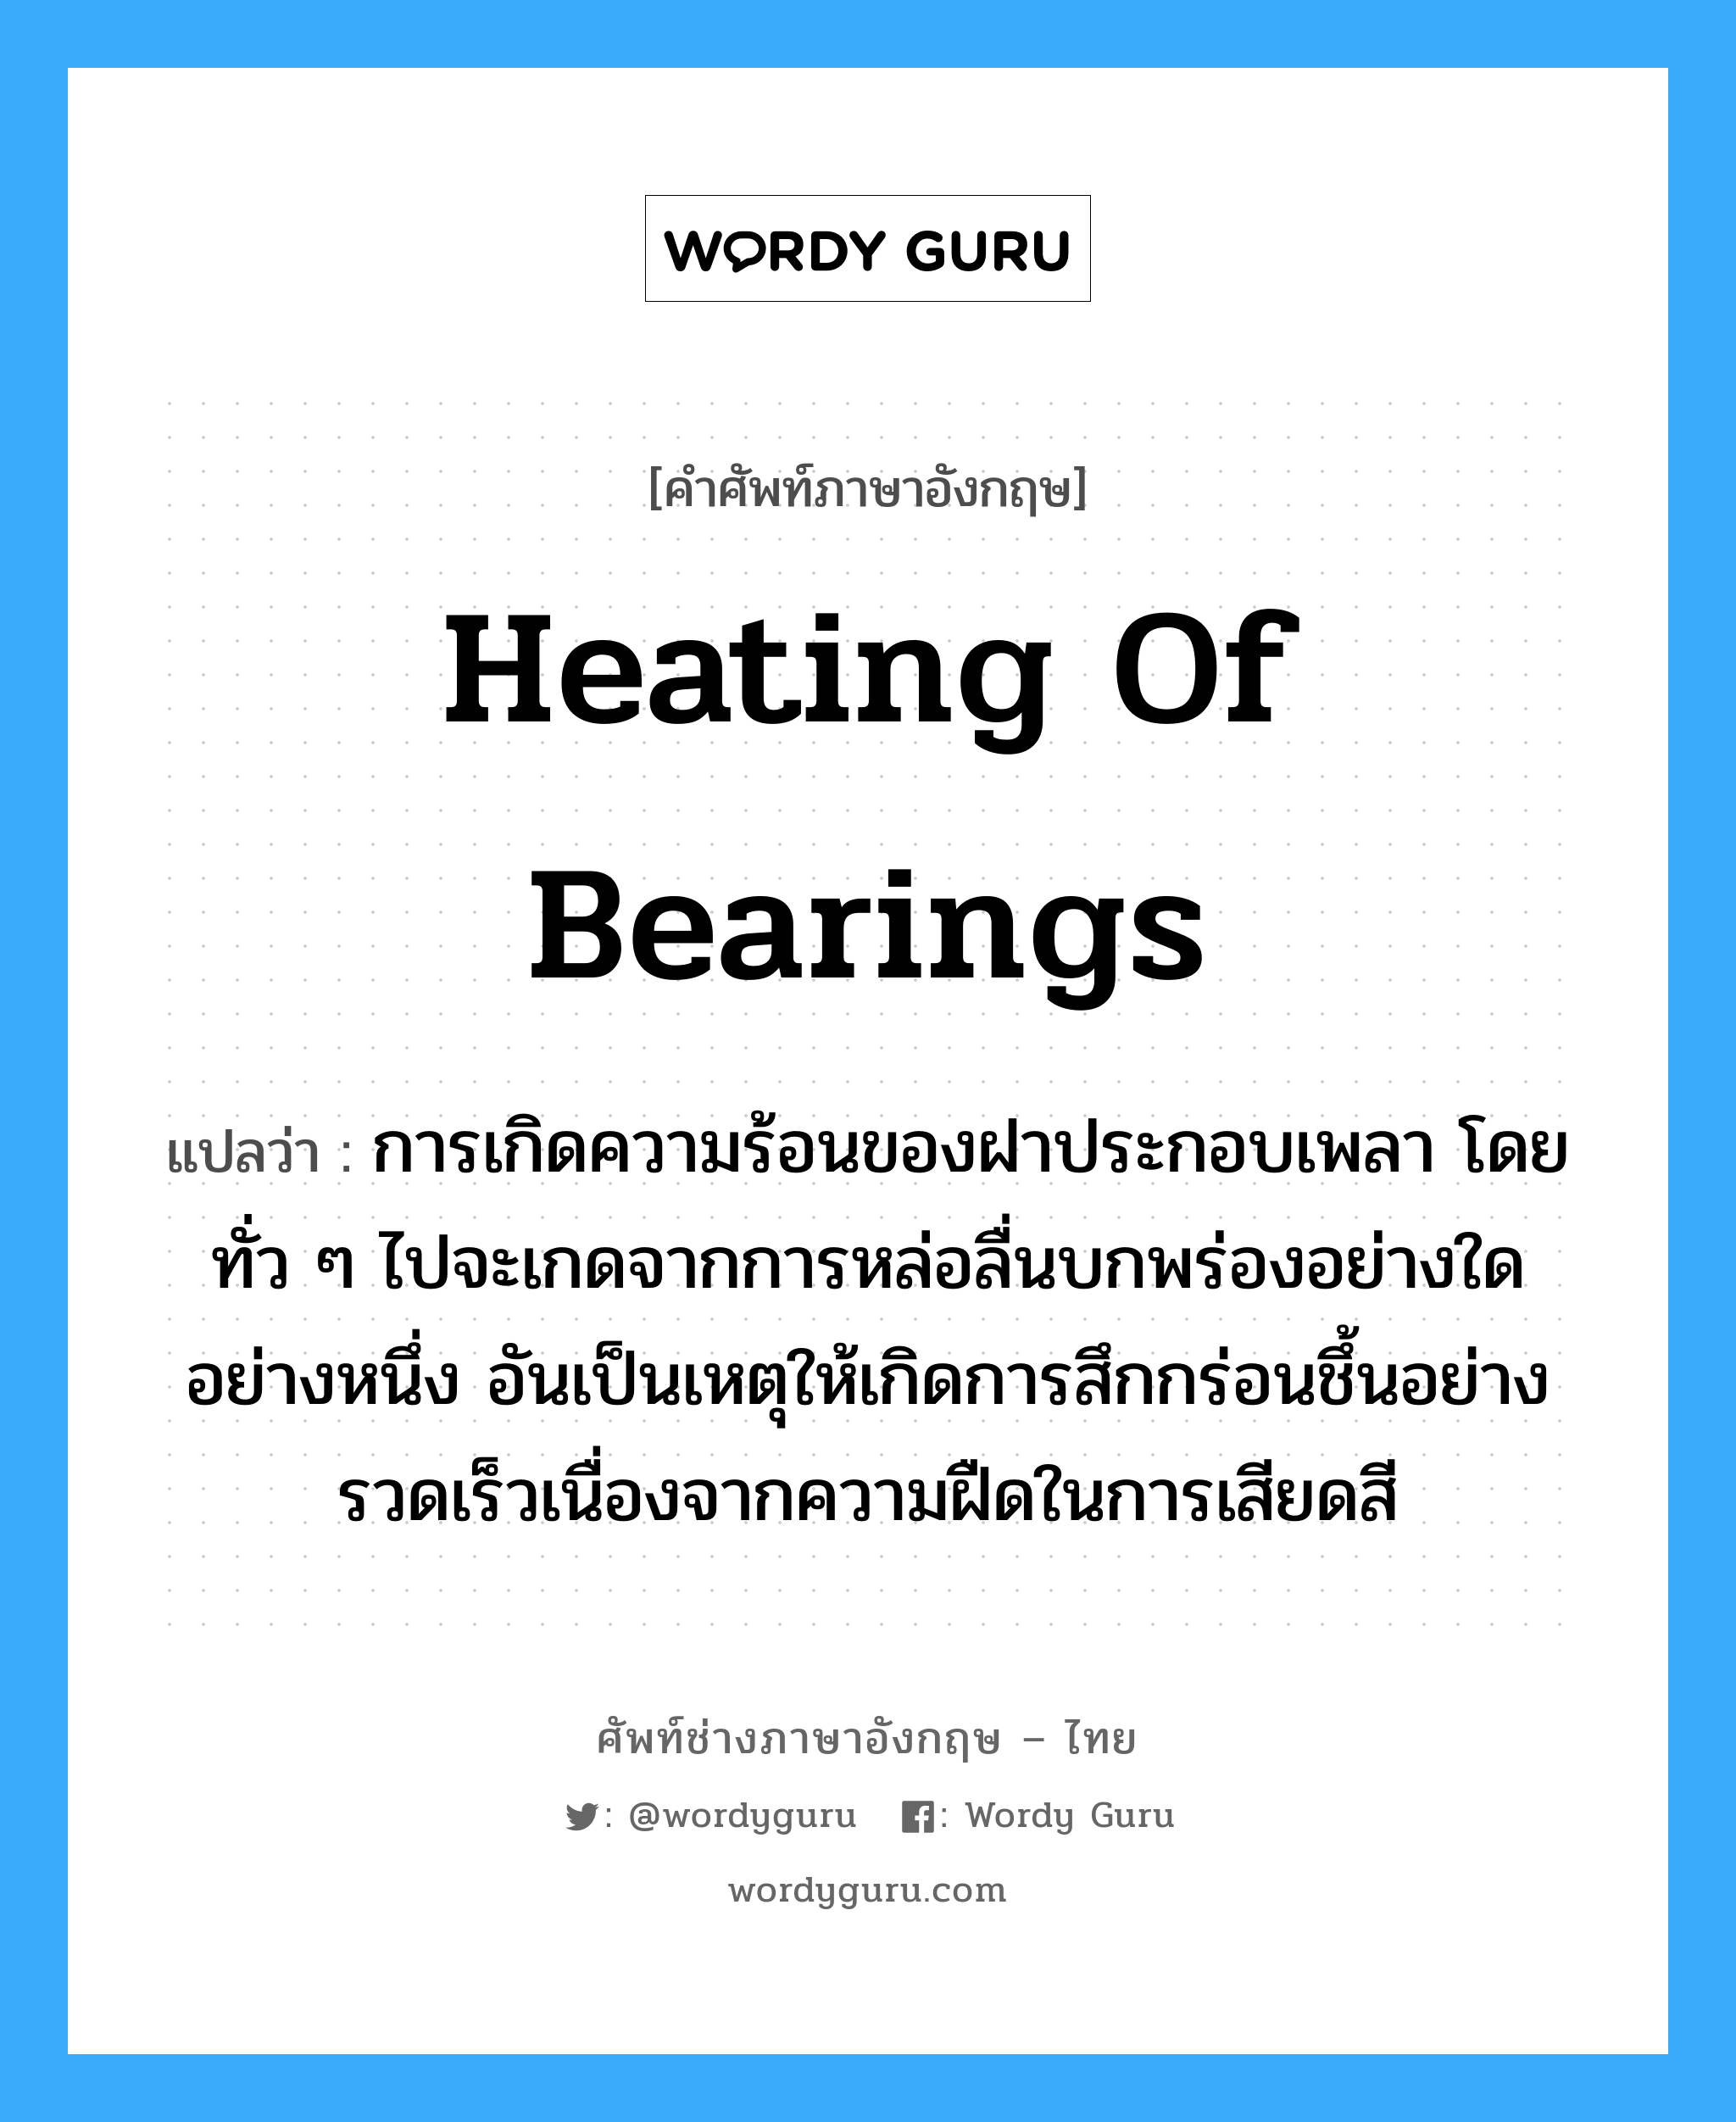 heating of bearings แปลว่า?, คำศัพท์ช่างภาษาอังกฤษ - ไทย heating of bearings คำศัพท์ภาษาอังกฤษ heating of bearings แปลว่า การเกิดความร้อนของฝาประกอบเพลา โดยทั่ว ๆ ไปจะเกดจากการหล่อลื่นบกพร่องอย่างใดอย่างหนึ่ง อันเป็นเหตุให้เกิดการสึกกร่อนชึ้นอย่างรวดเร็วเนื่องจากความฝืดในการเสียดสี